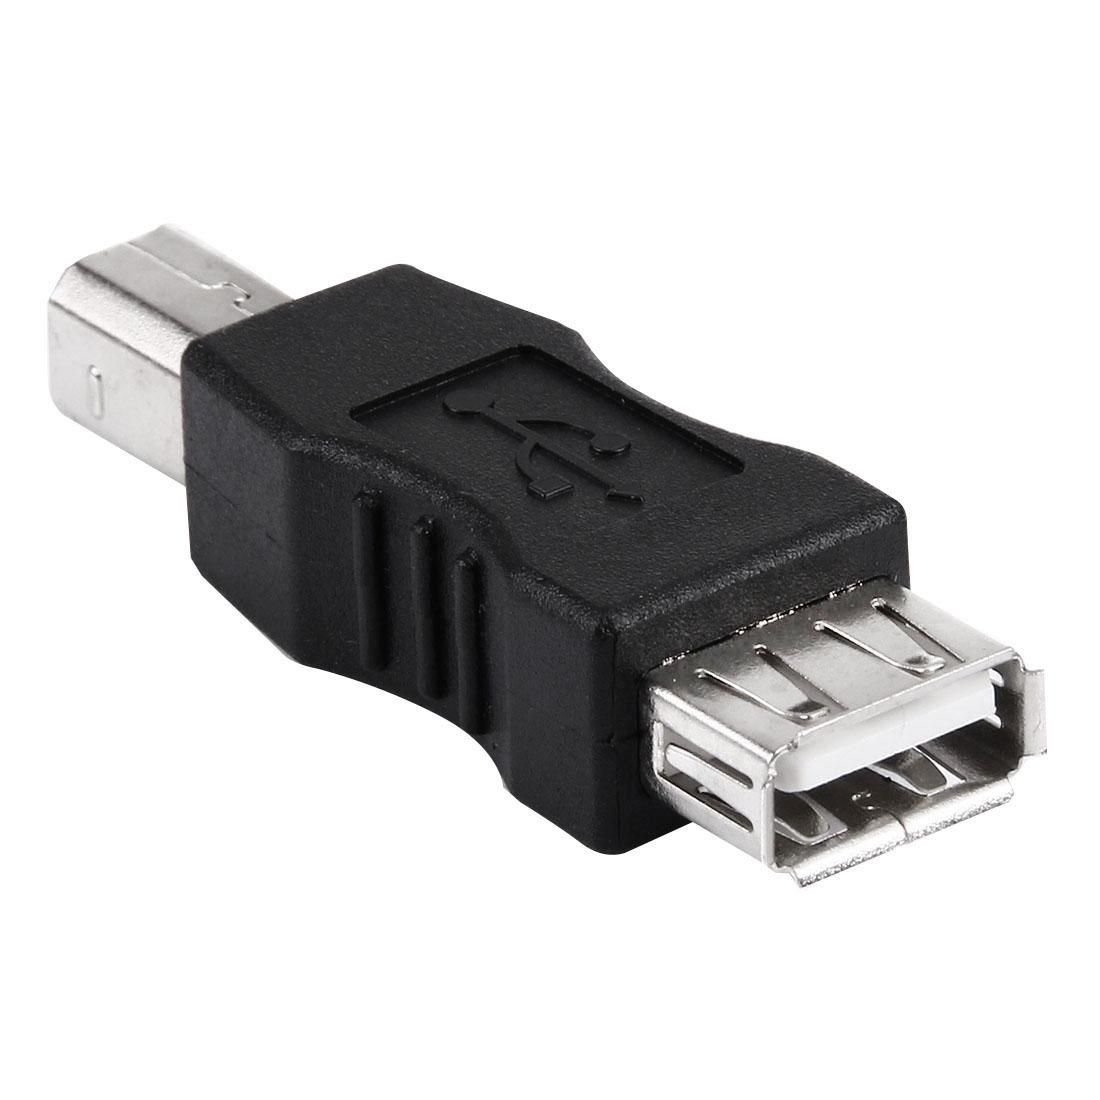 USB A female to B male Printer converter adapter (Black)